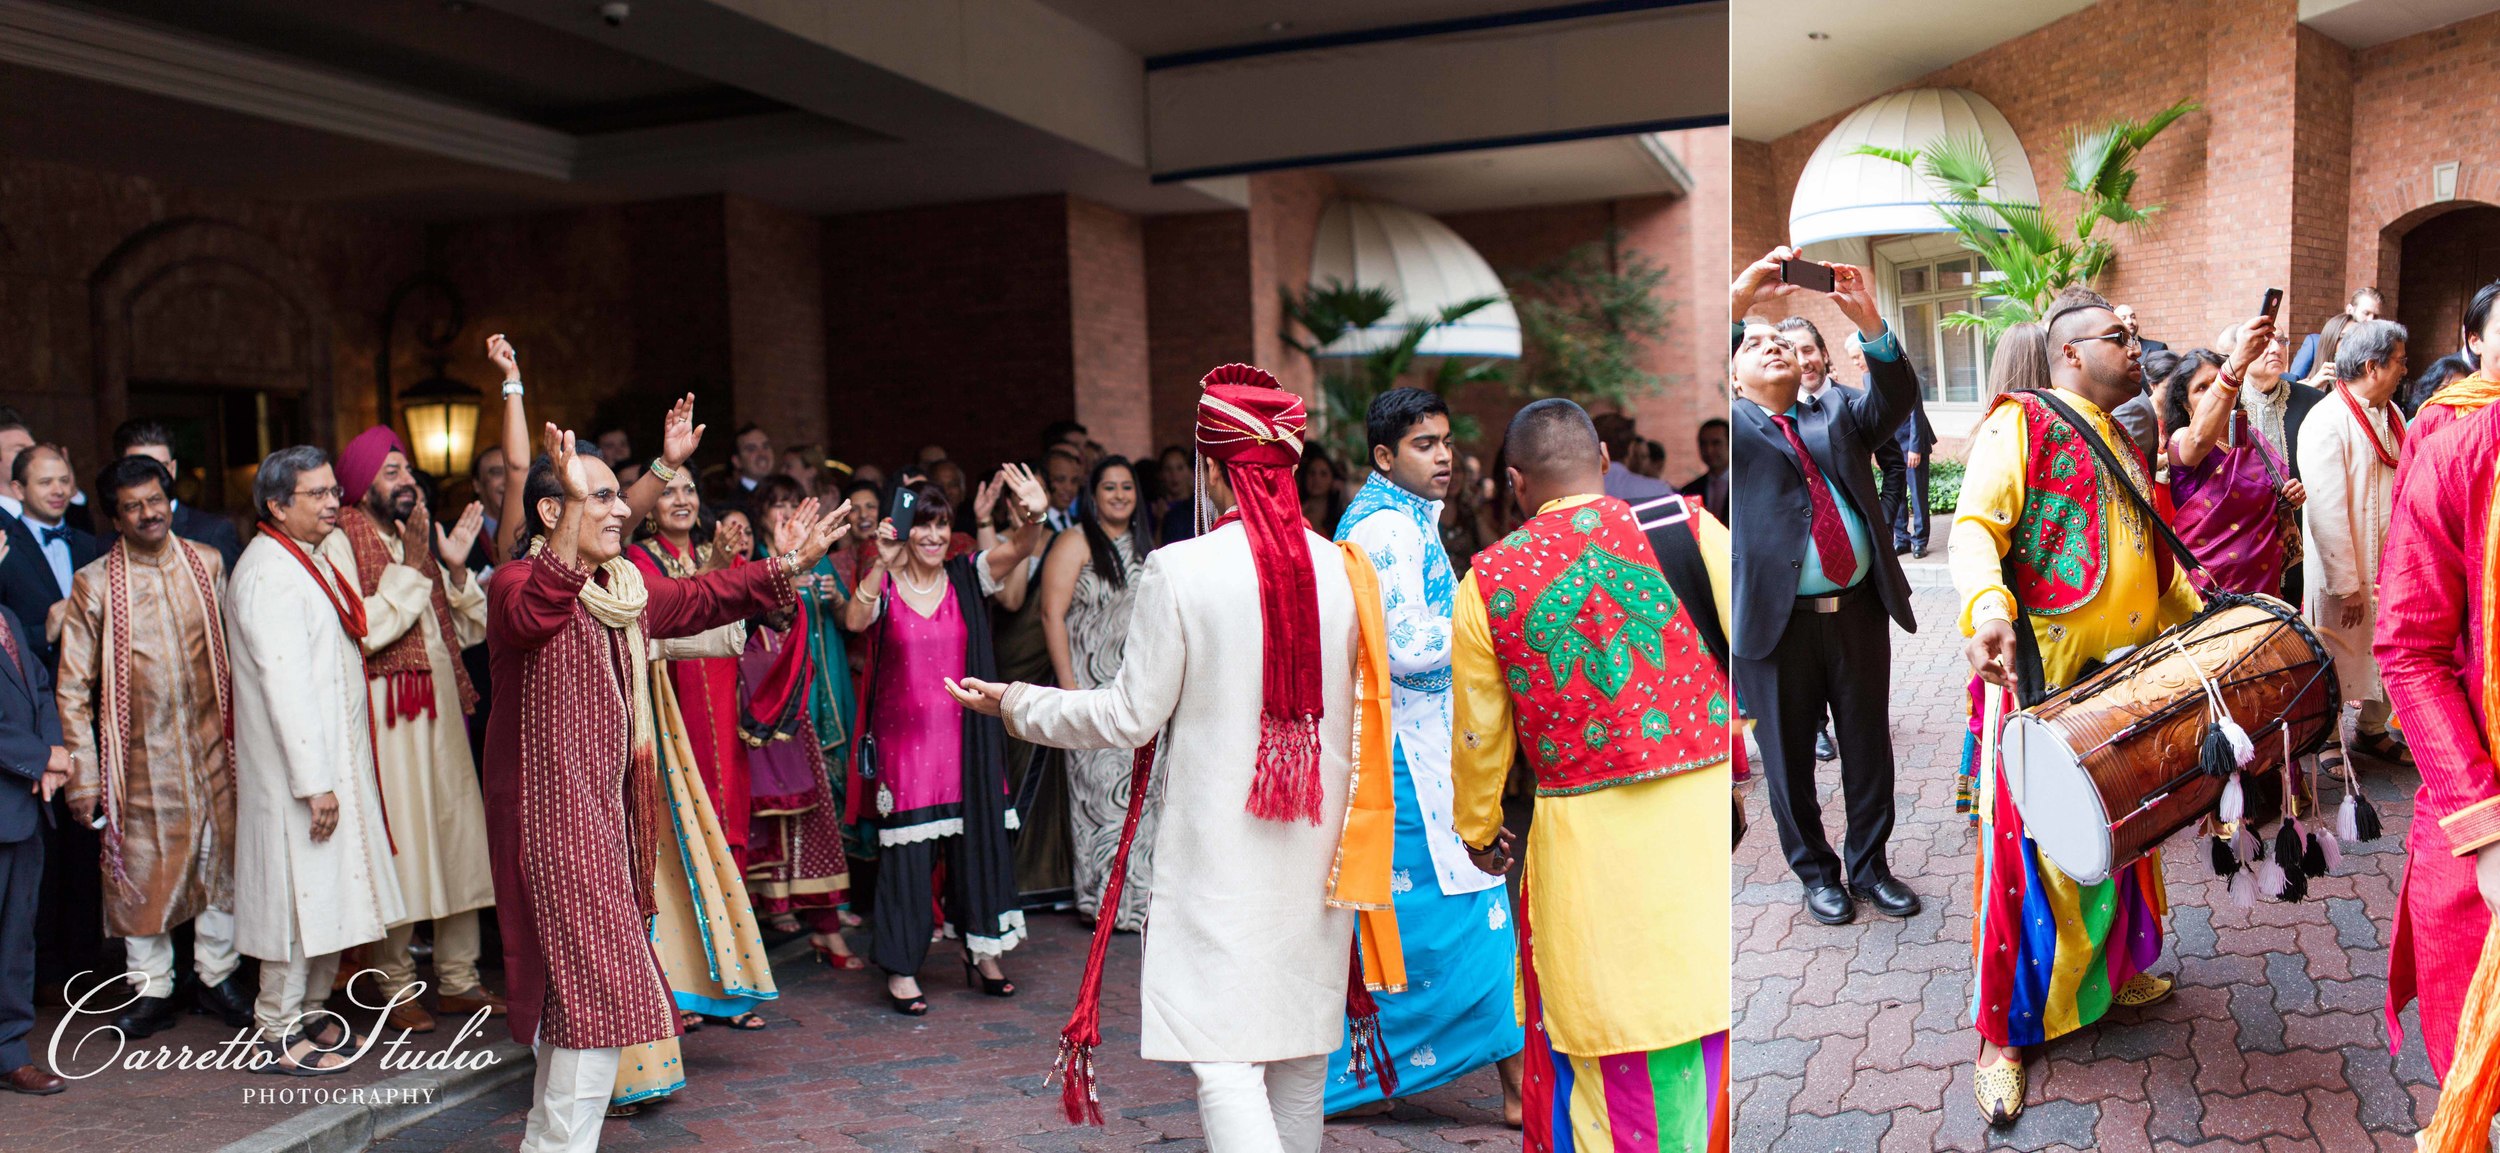 St. Louis Indian Wedding Photography-1032.jpg